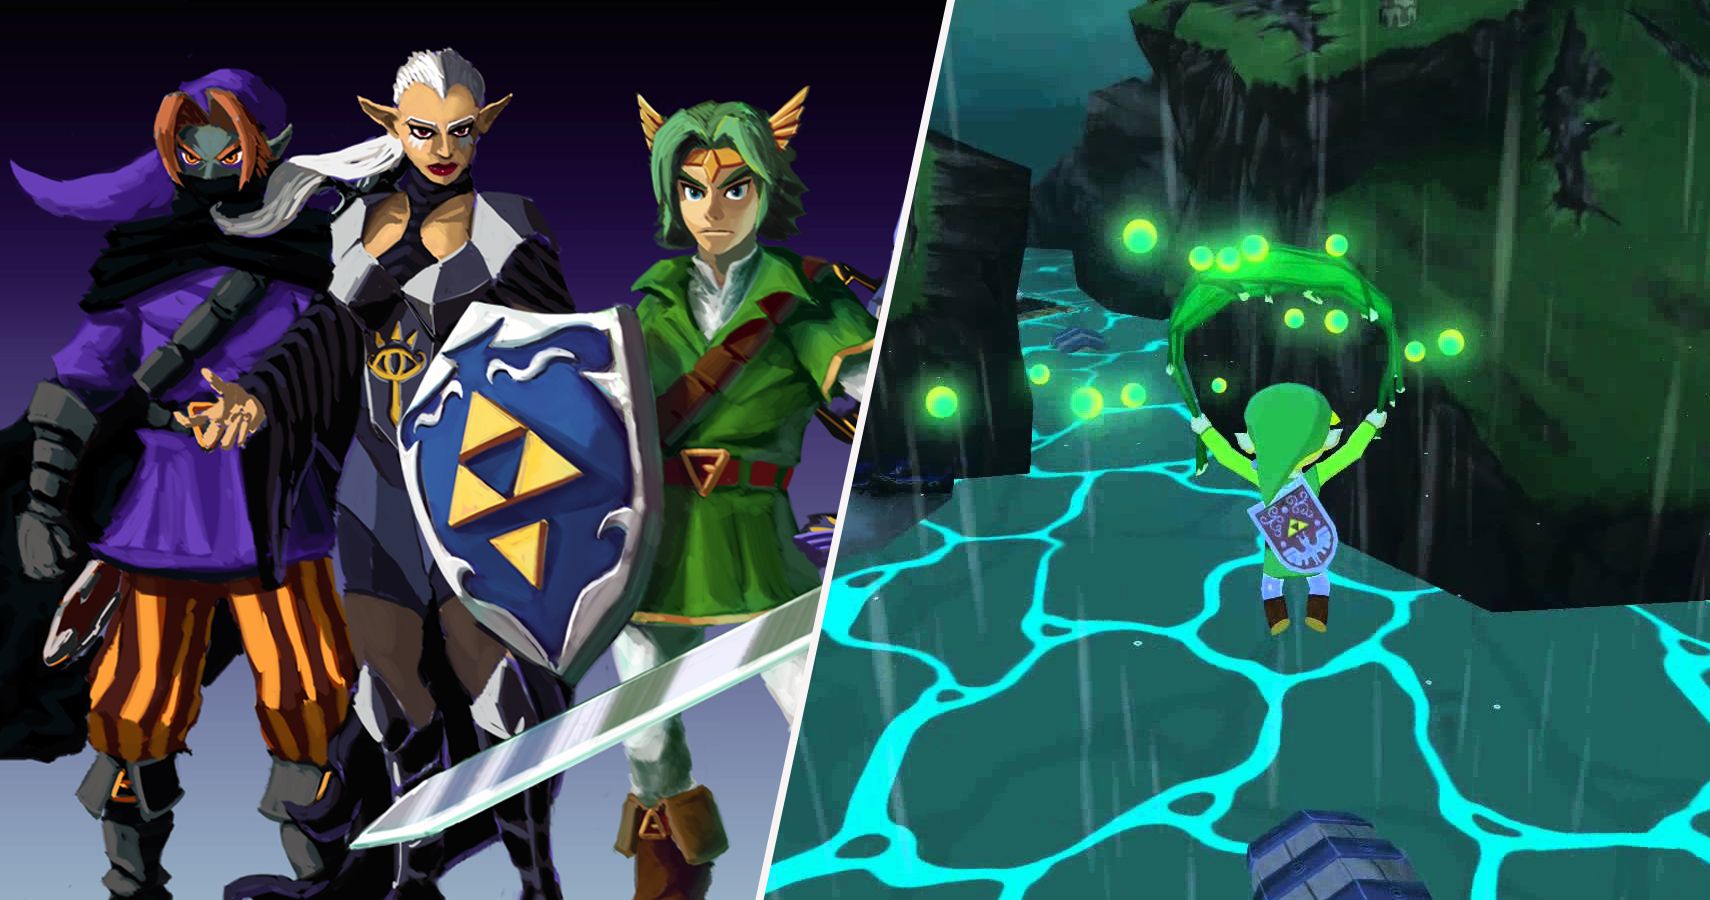 Largest Zelda Wiki On the Internet Has Gone Independent - Gameranx